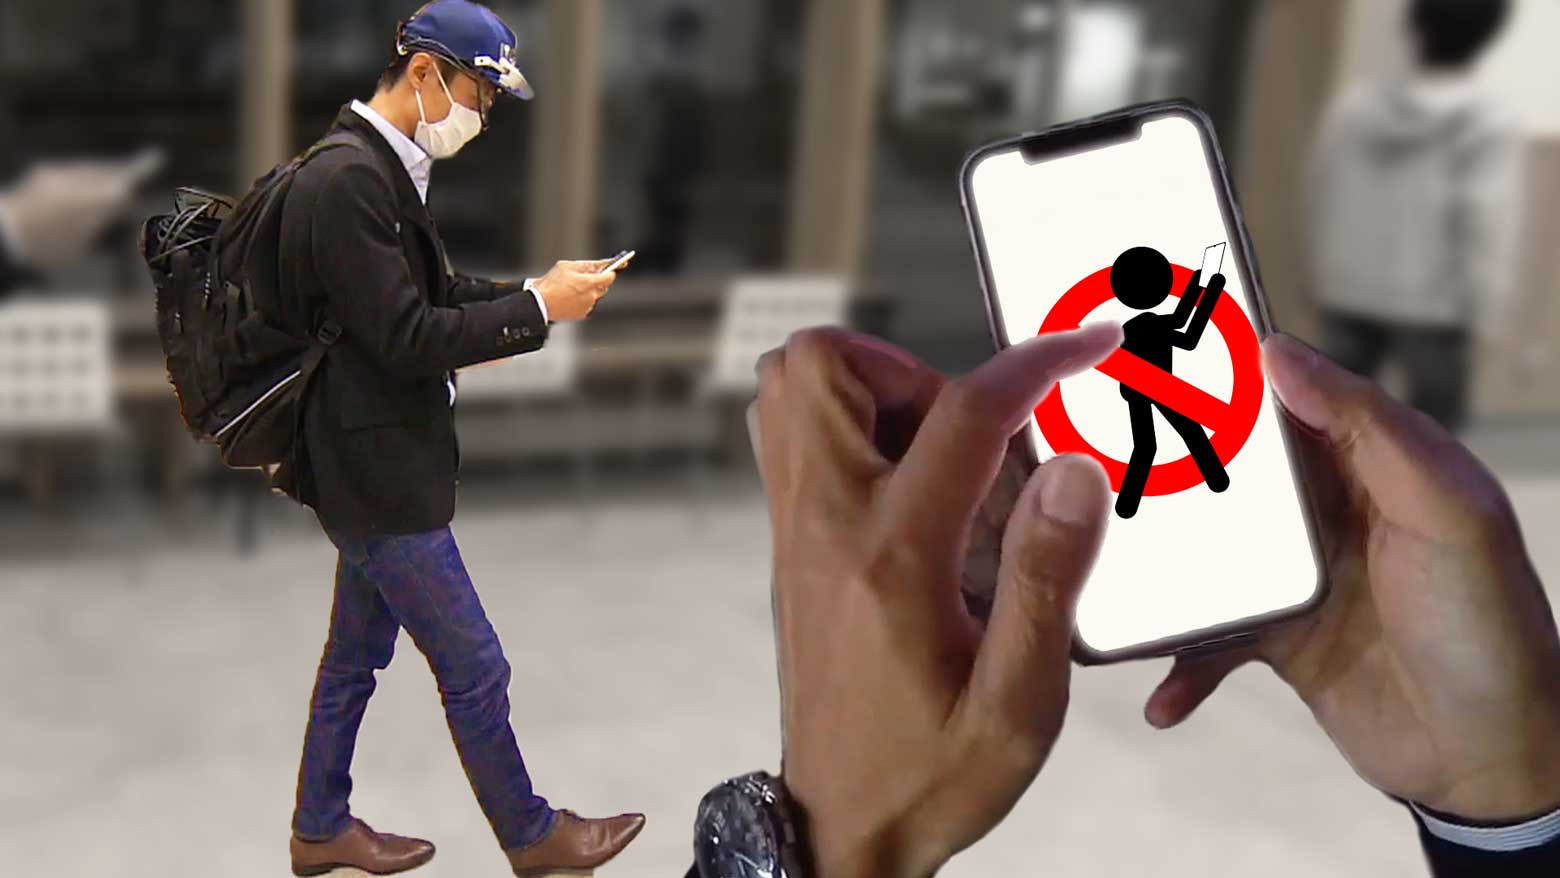 Smartphones Are Pedestrian Killers